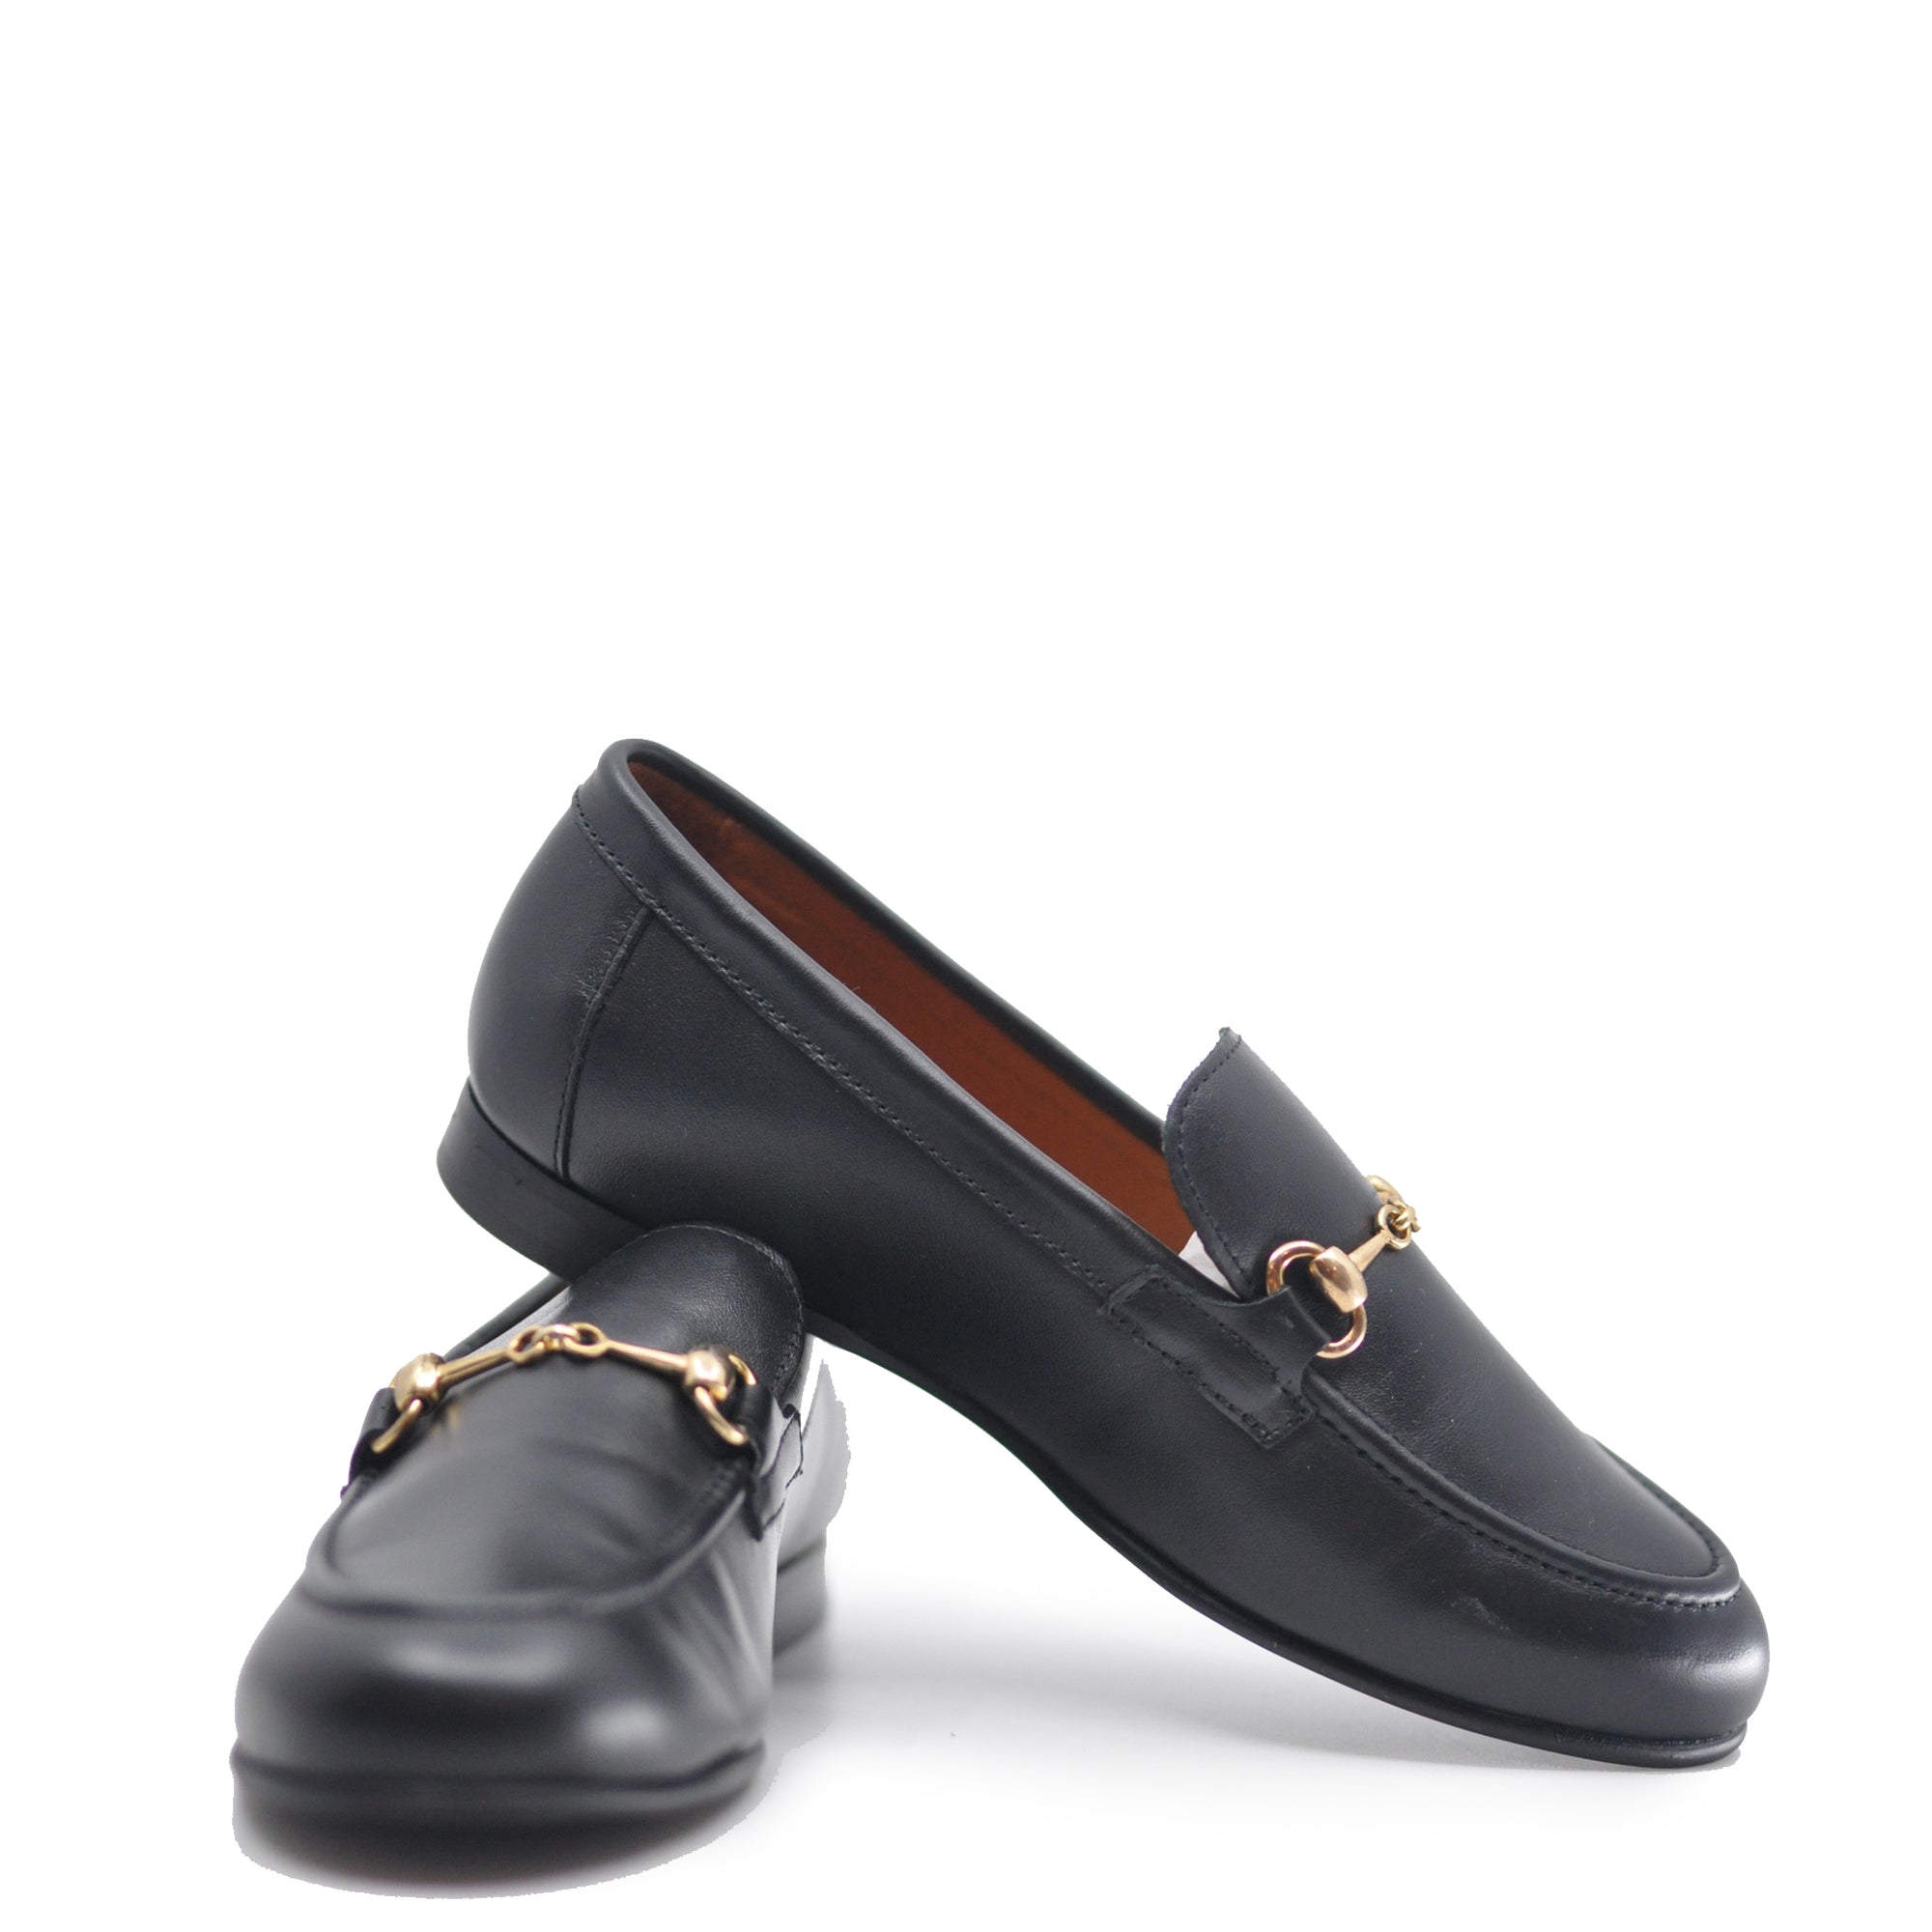 Atlanta Mocassin Black Leather Buckle Dress Shoe - Tassel Children Shoes